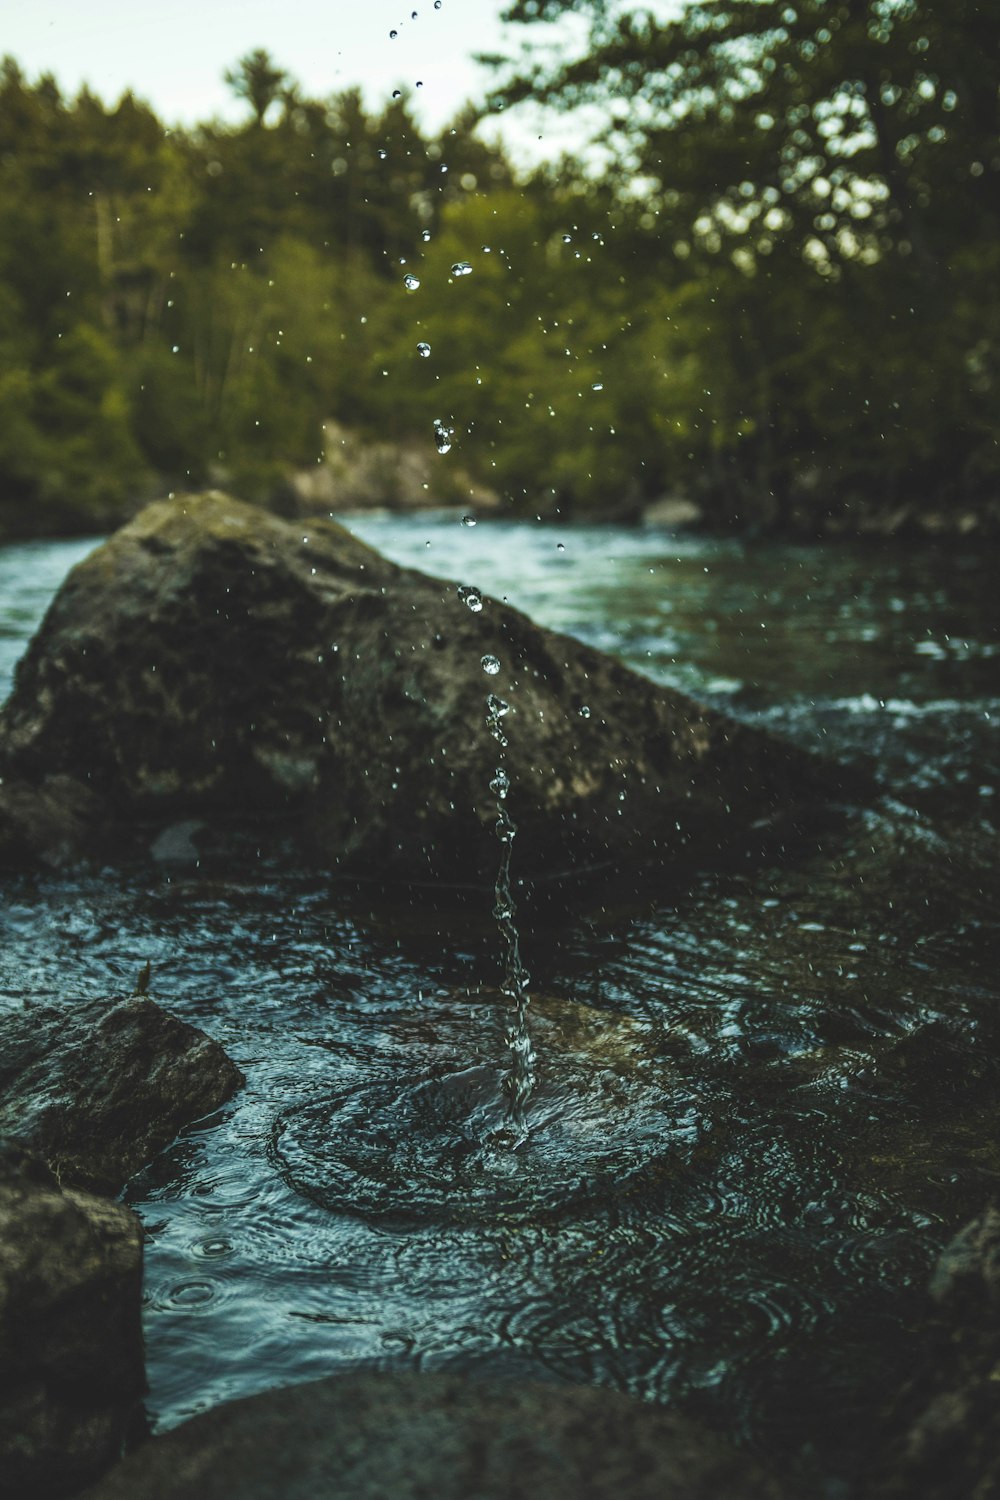 water falling from gray rock